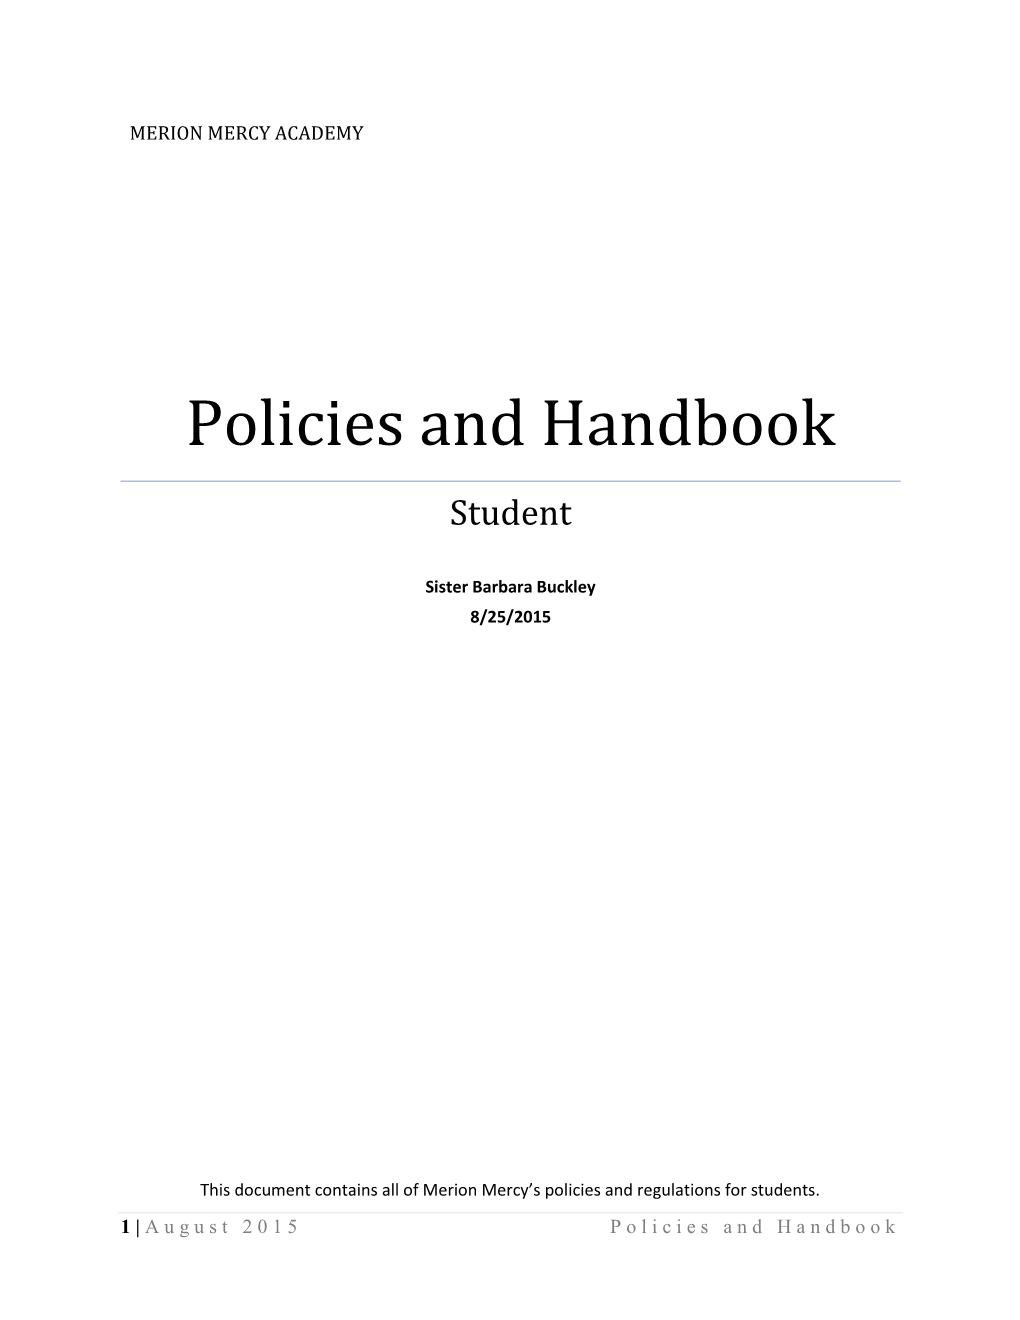 Policies and Handbook Student